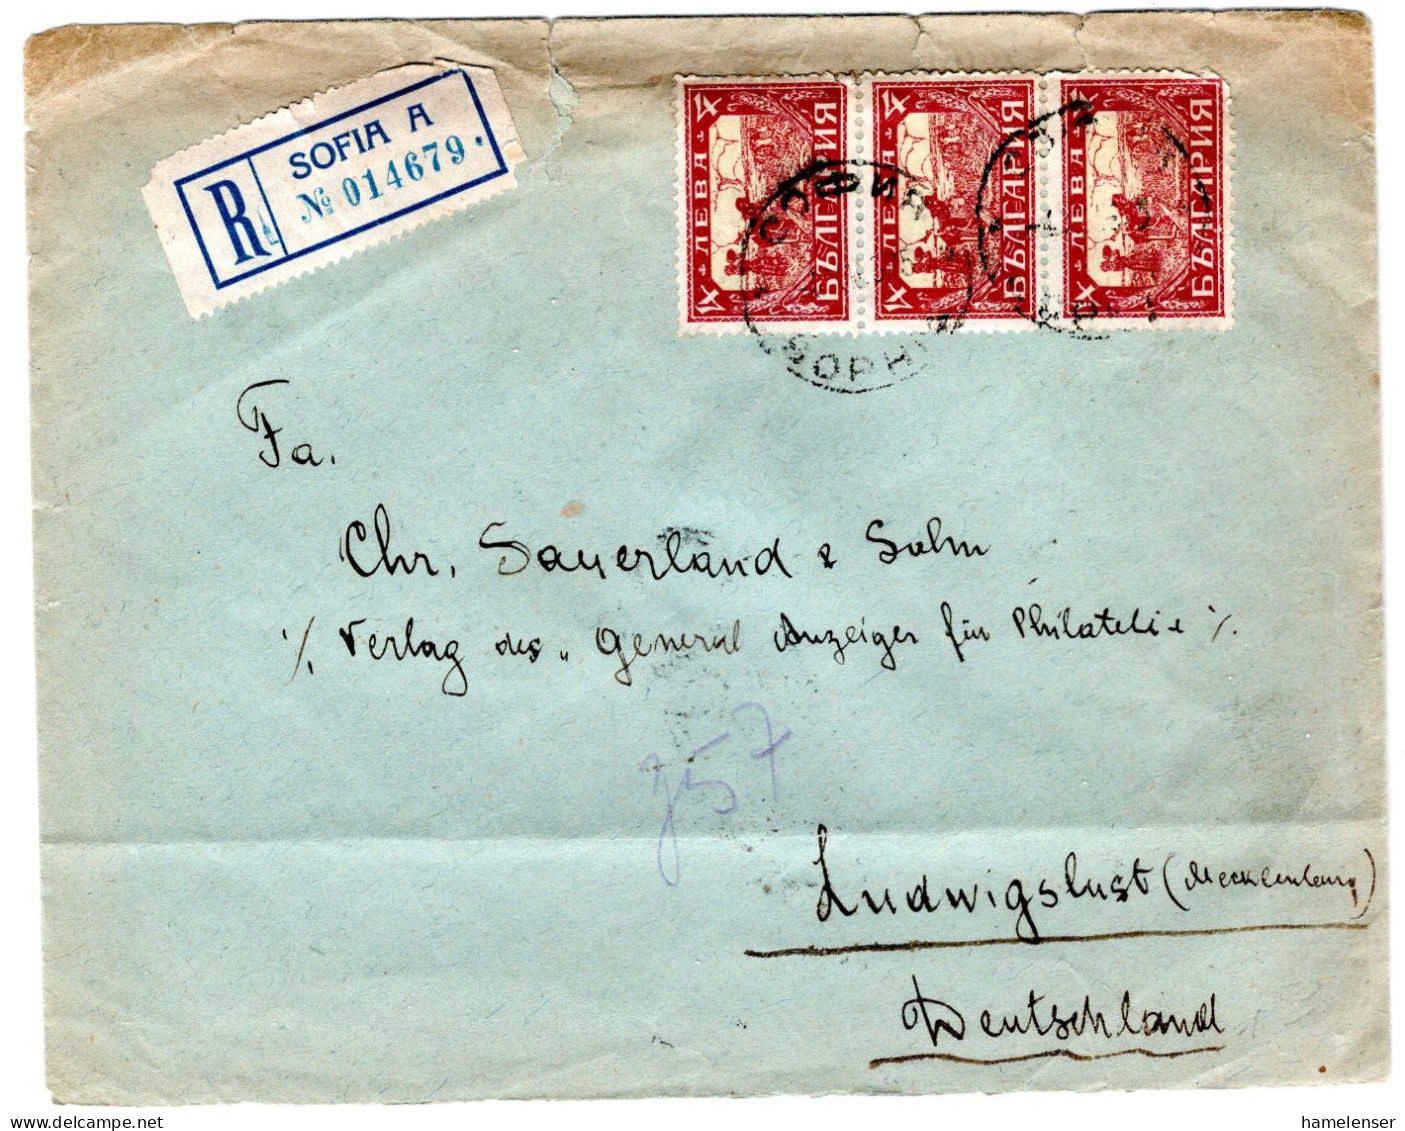 L64883 - Bulgarien - 1925 - 3@4L Landwirtschaft A R-Bf SOFIA -> LUDWIGSLUST (Deutschland), Kl Mgl - Cartas & Documentos